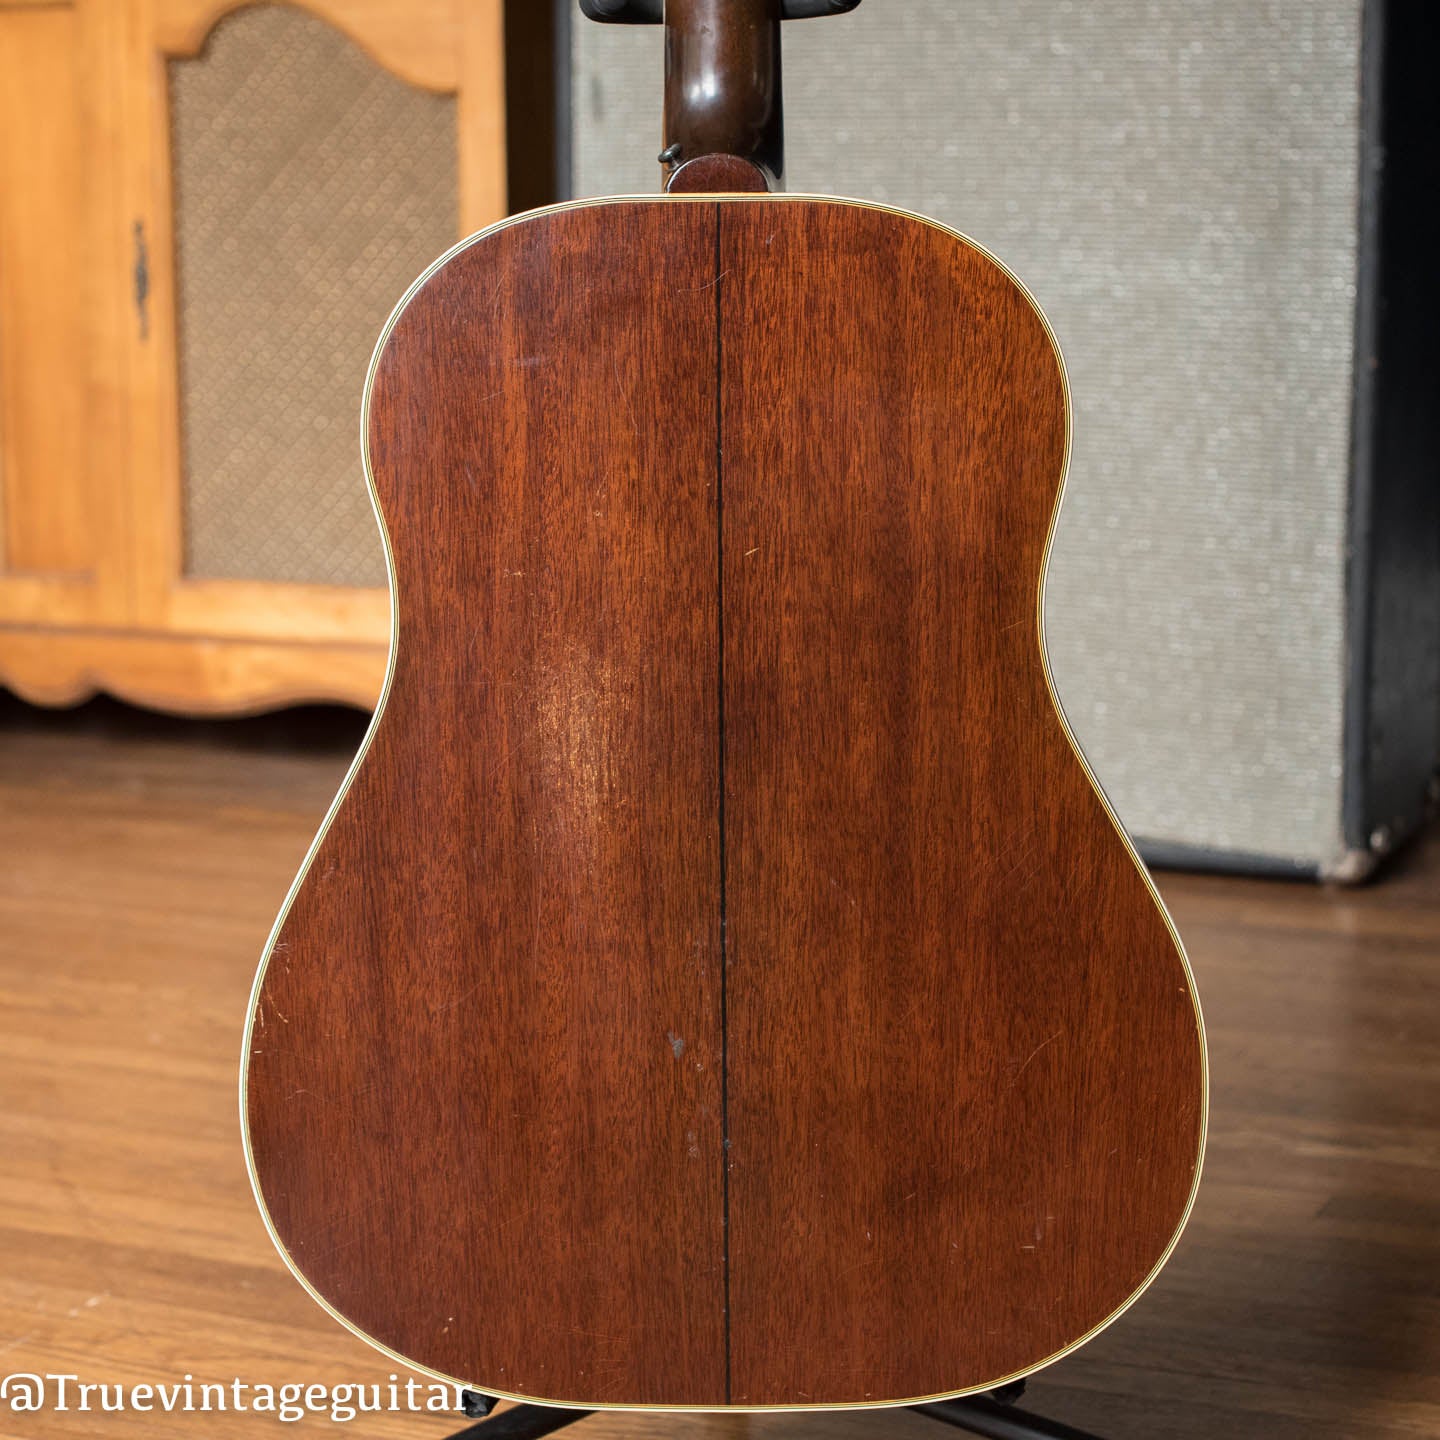 Mahogany back and sides, 1950 Gibson SJ guitar